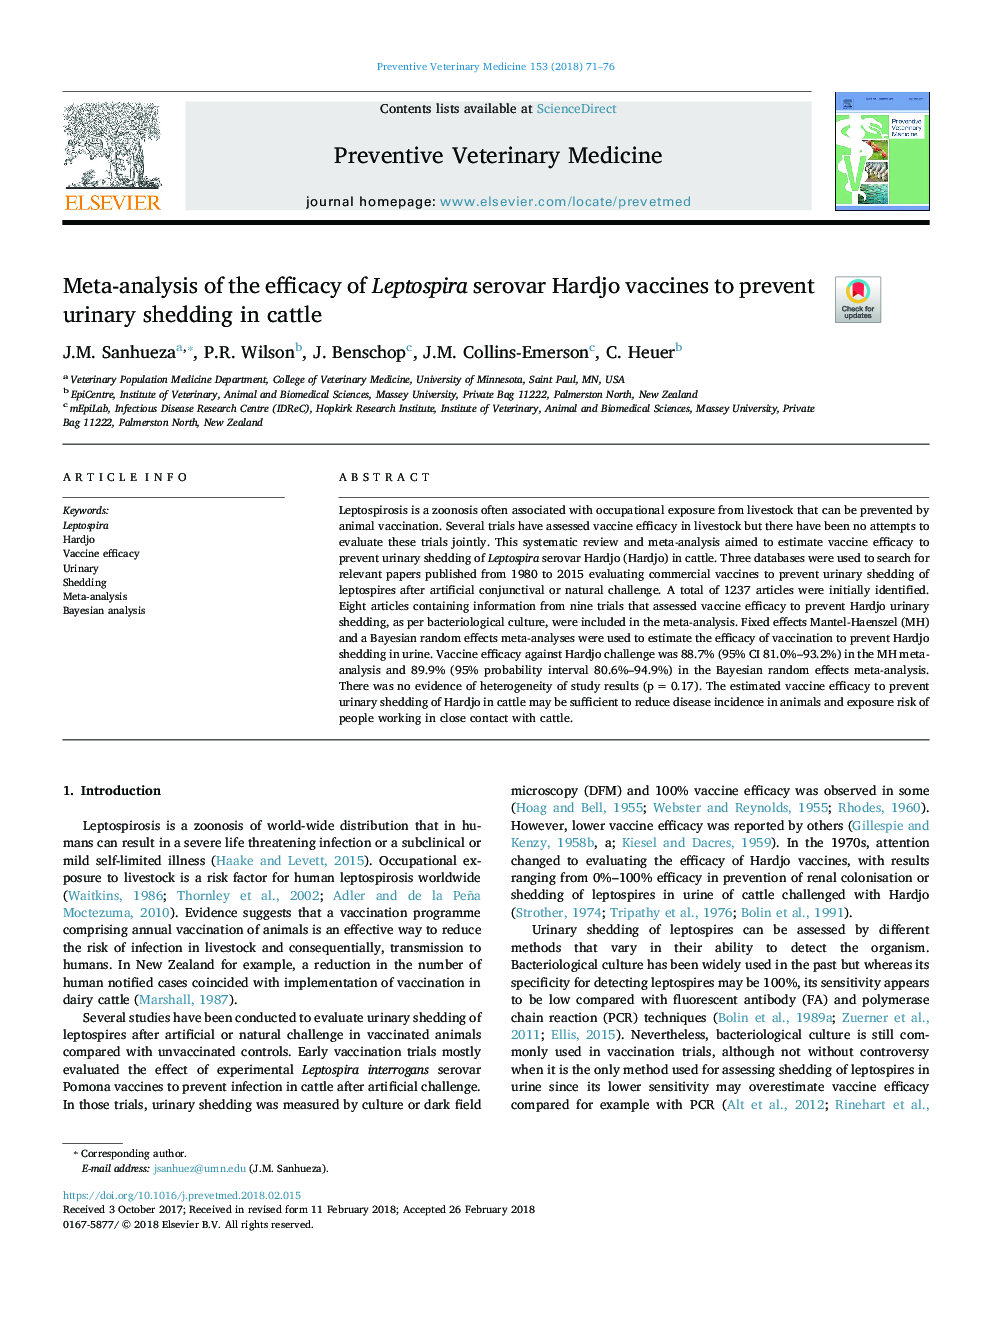 Meta-analysis of the efficacy of Leptospira serovar Hardjo vaccines to prevent urinary shedding in cattle